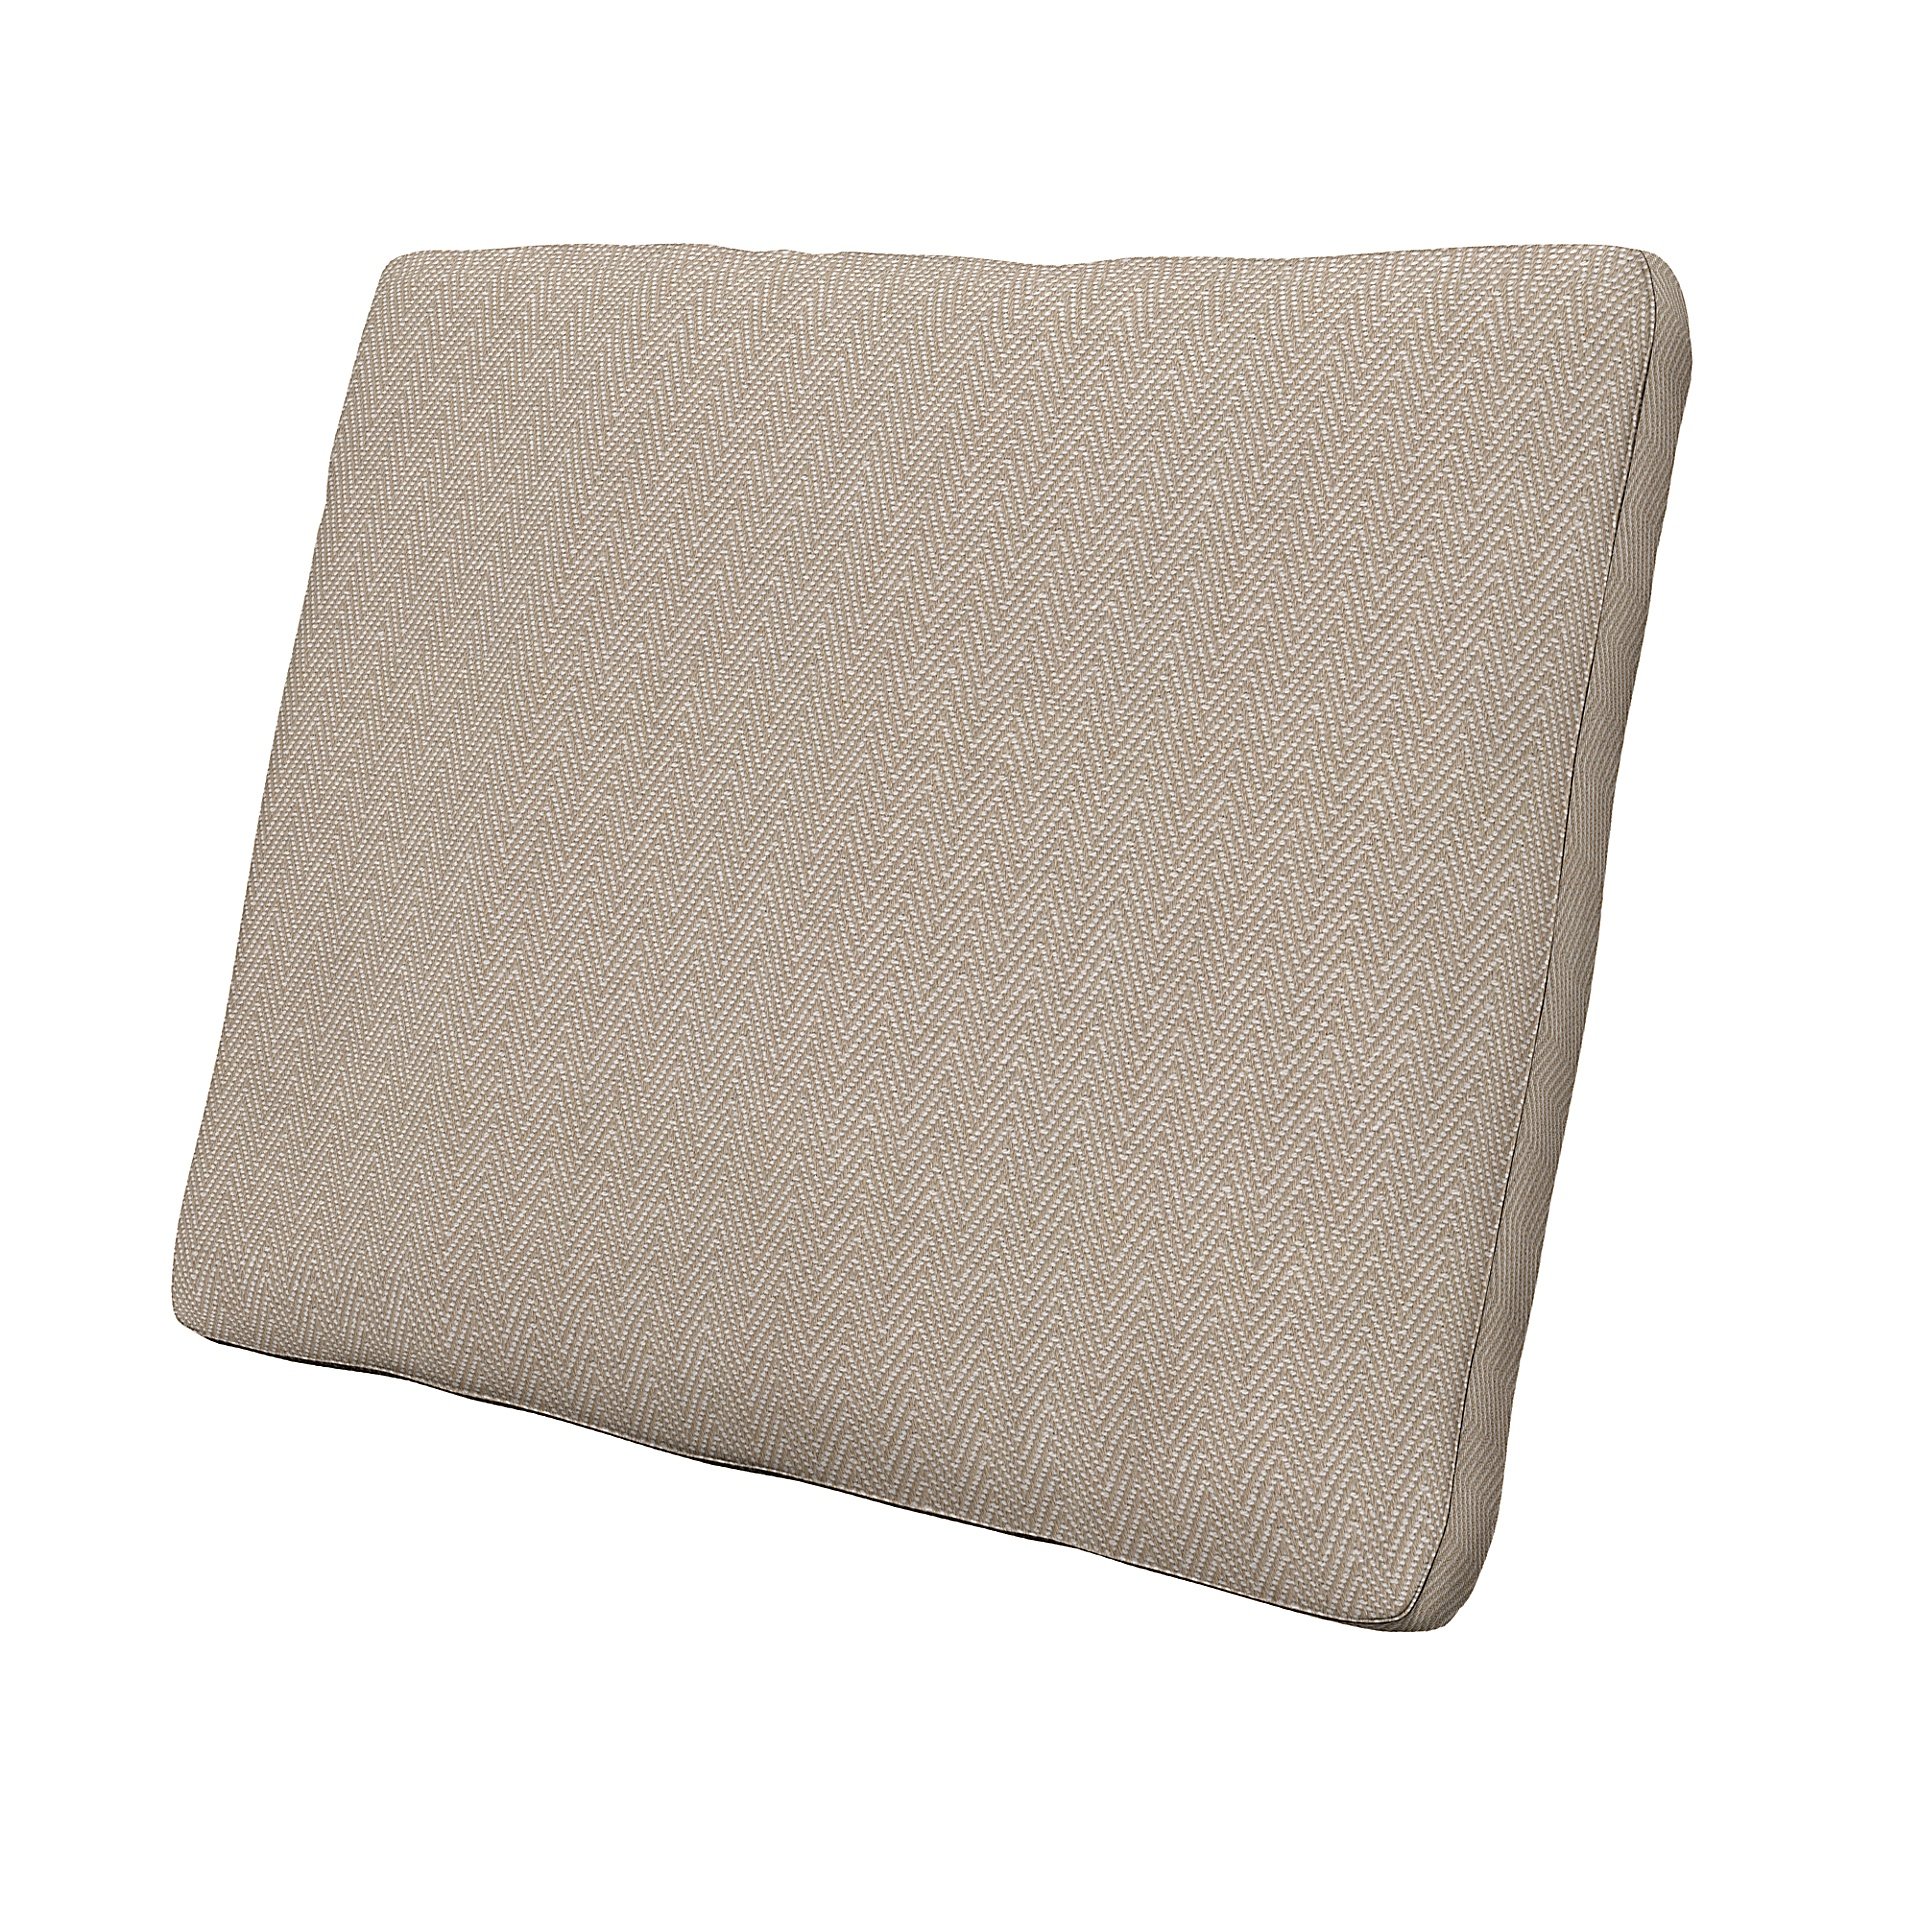 IKEA - Cushion Cover Karlstad 58x48x5 cm, Sand Beige, Cotton - Bemz